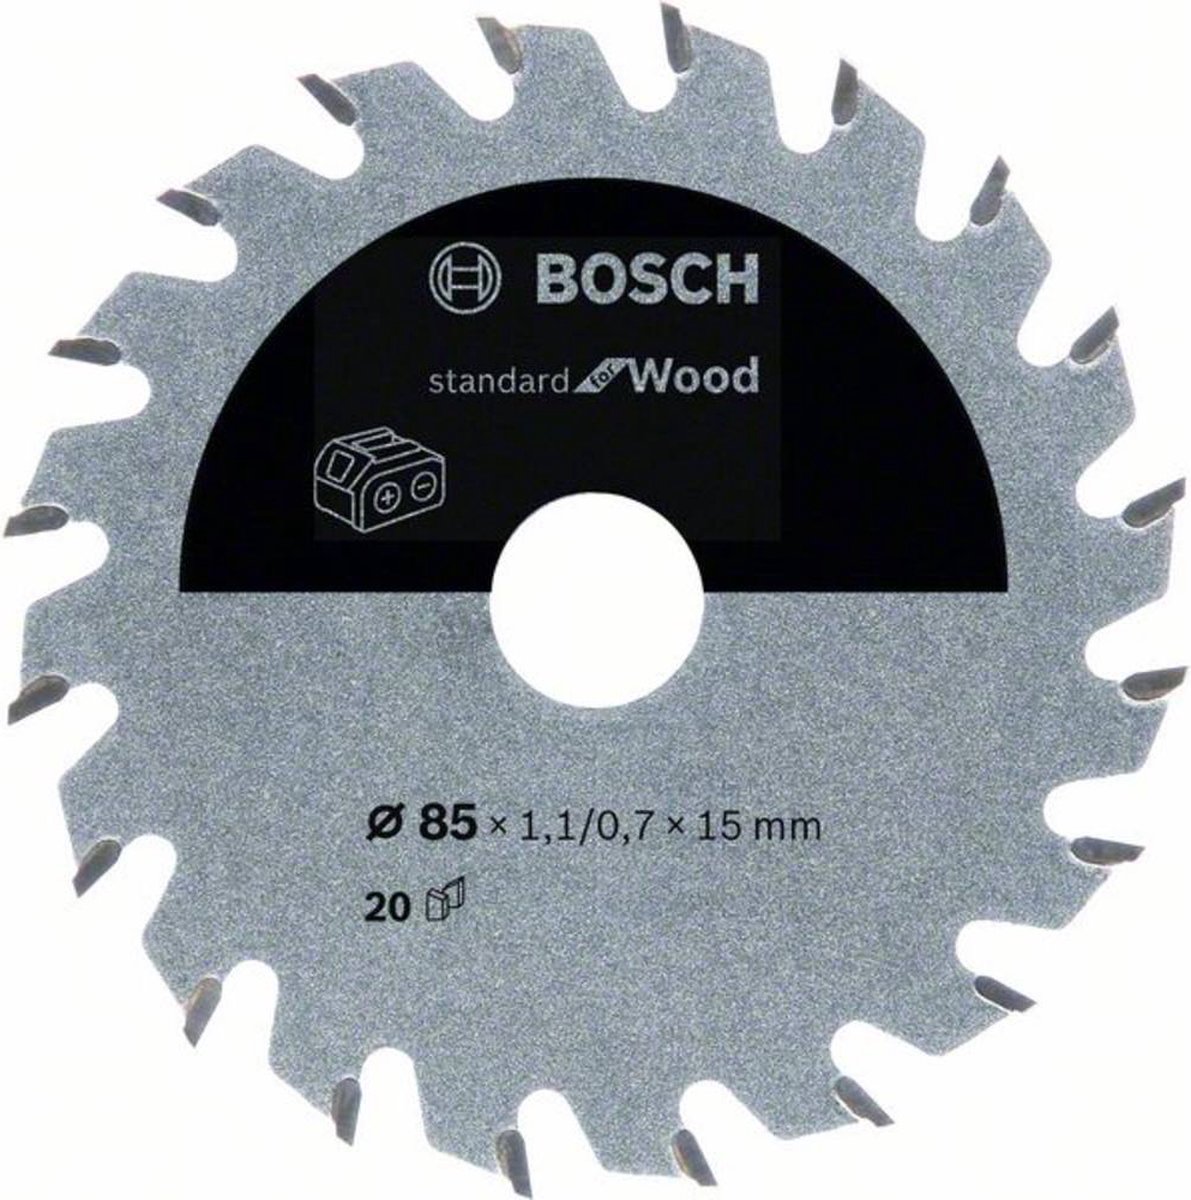 Bosch 85X1.1 Hoja De Sierra Circular / 0.7X15 Z20